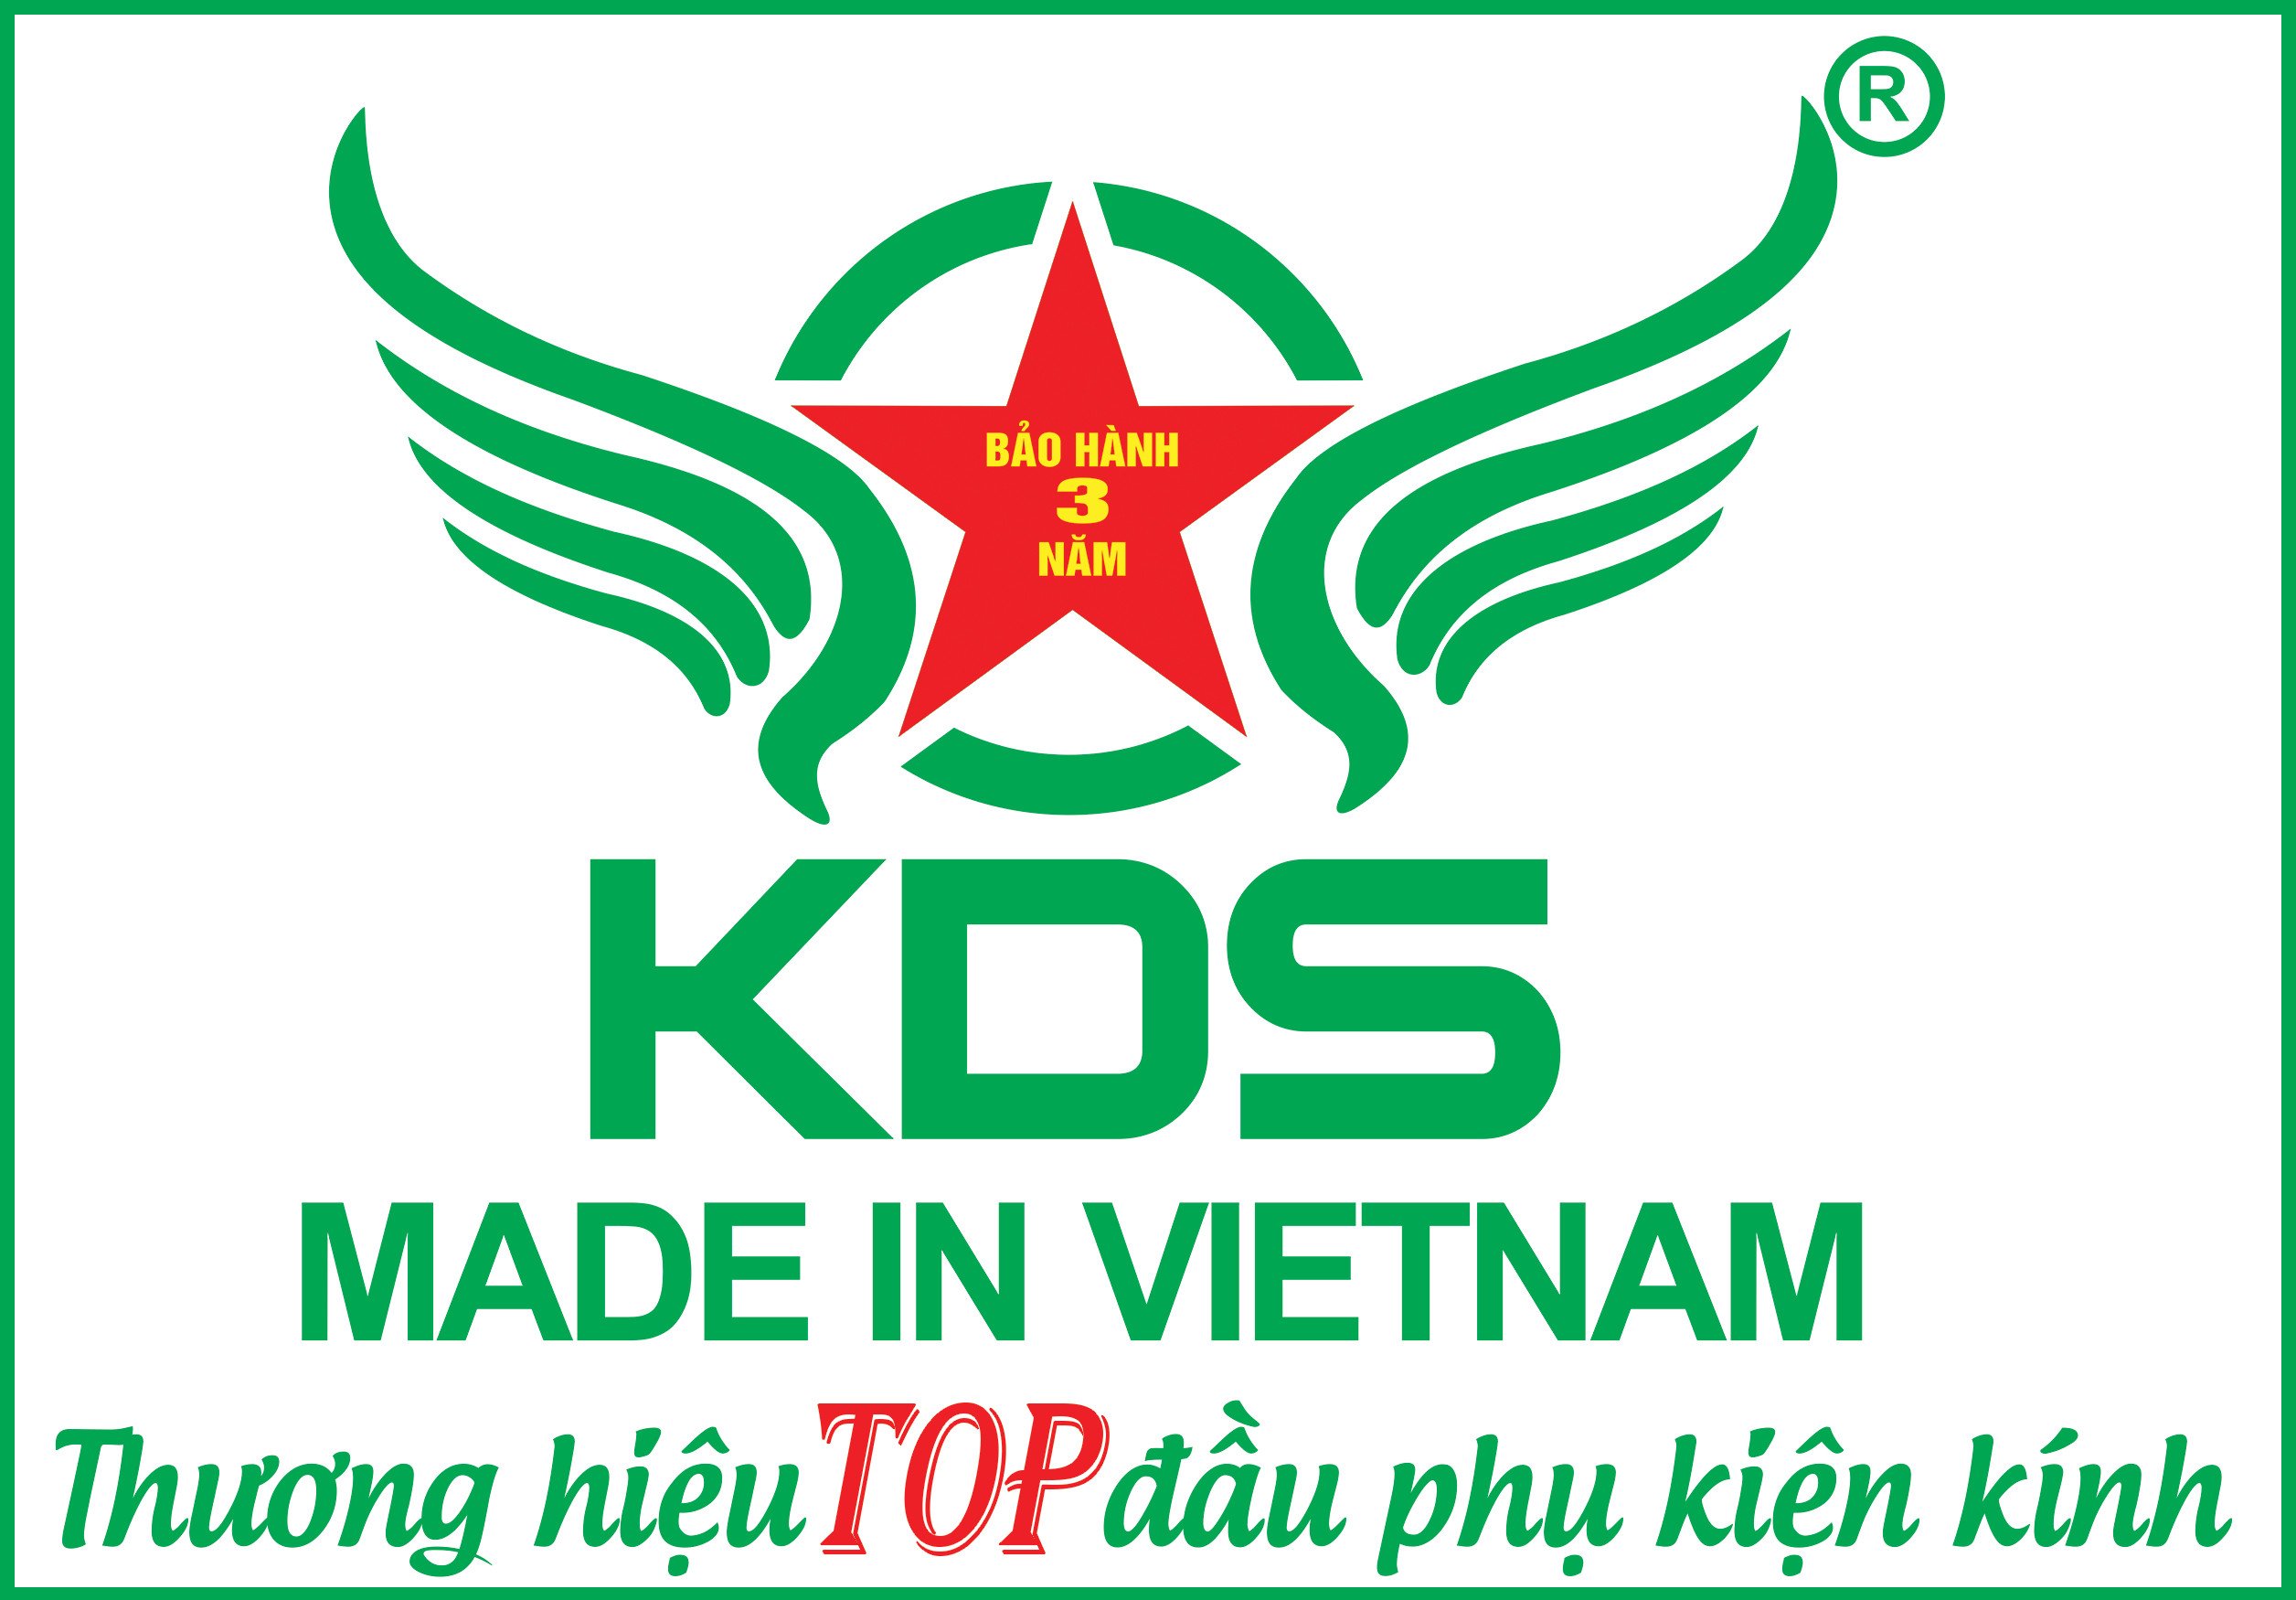 KDS "made in Vietnam"